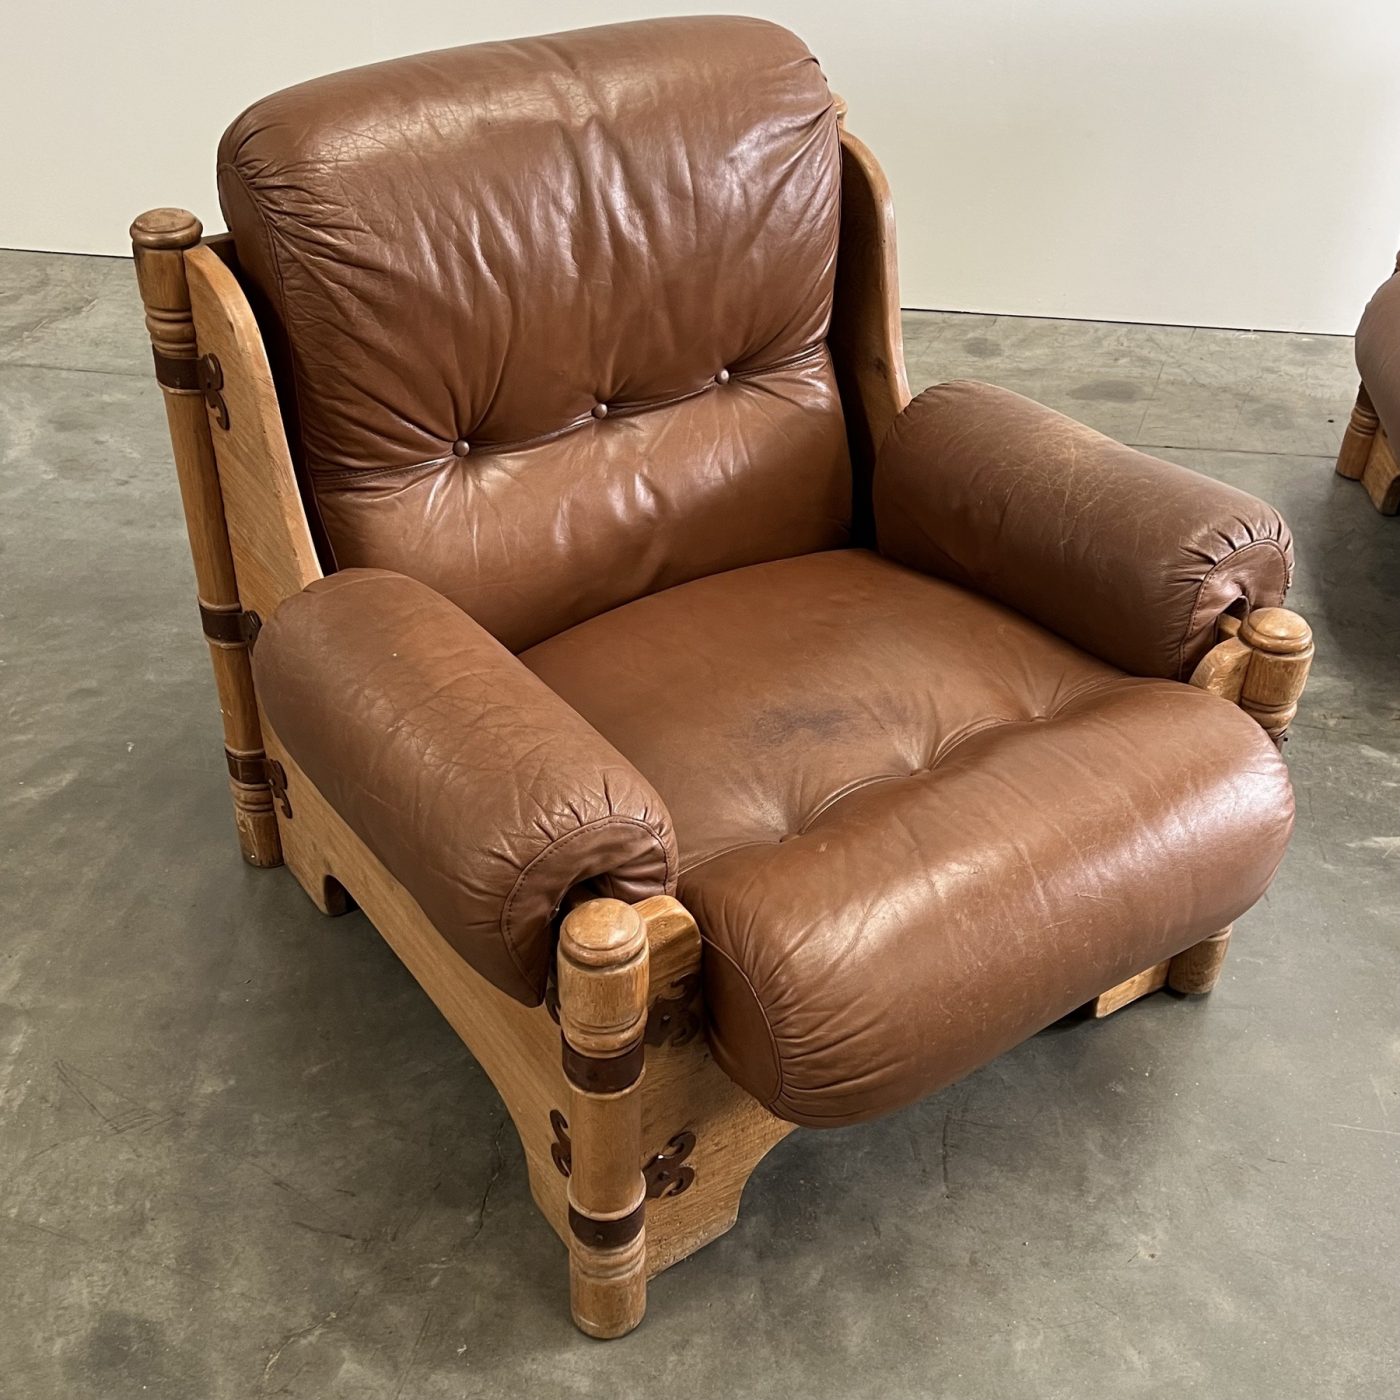 objet-vagabond-leather-set0000